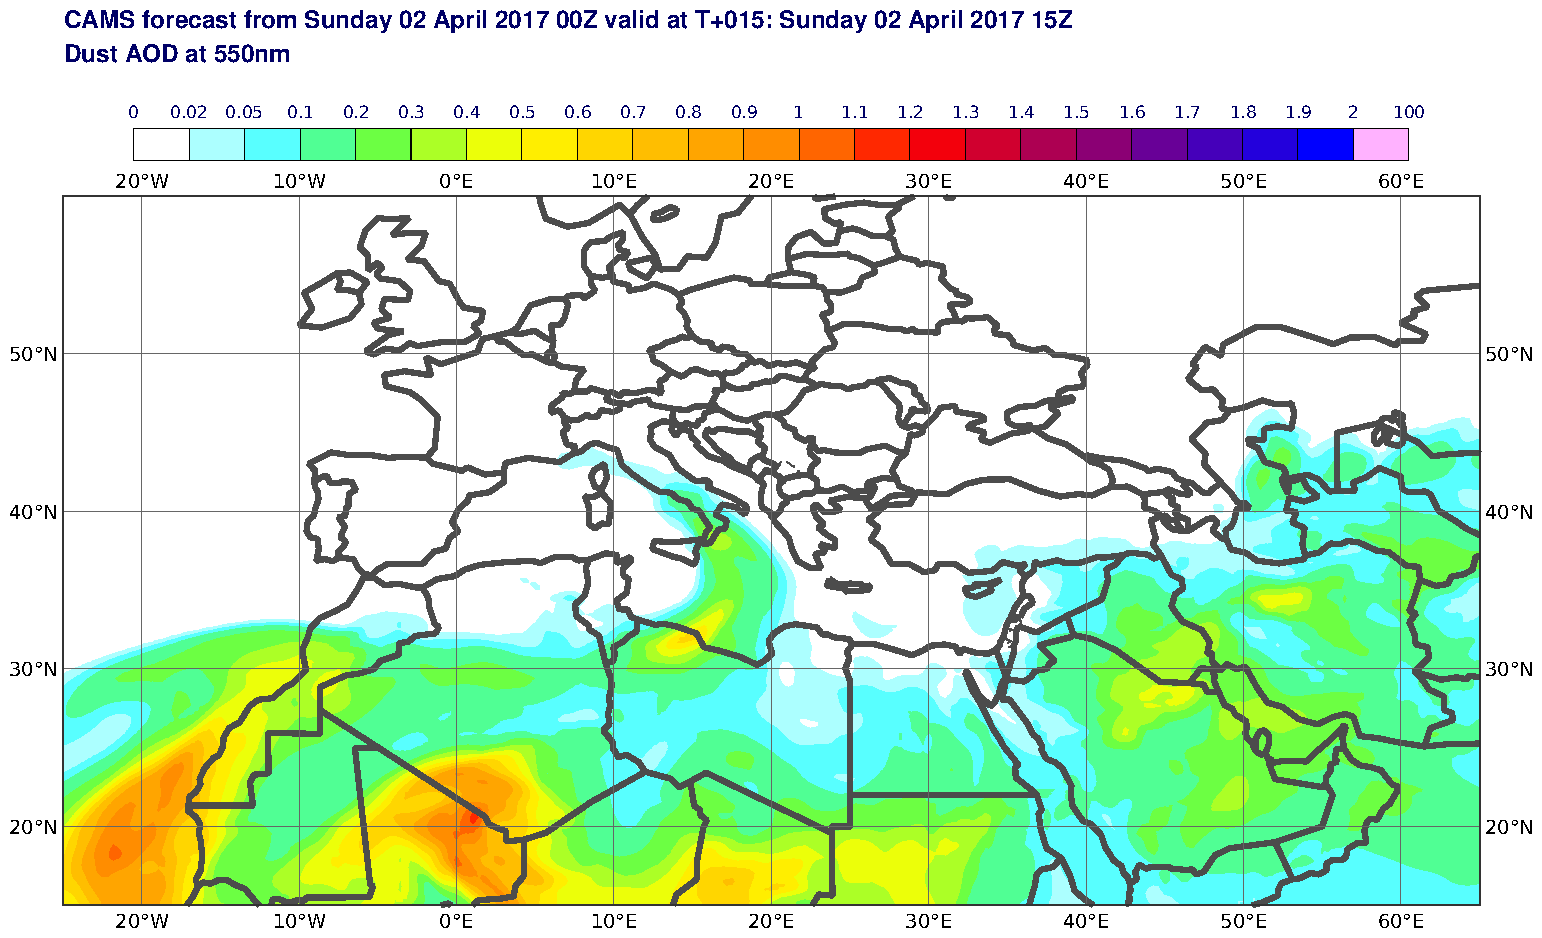 Dust AOD at 550nm valid at T15 - 2017-04-02 15:00